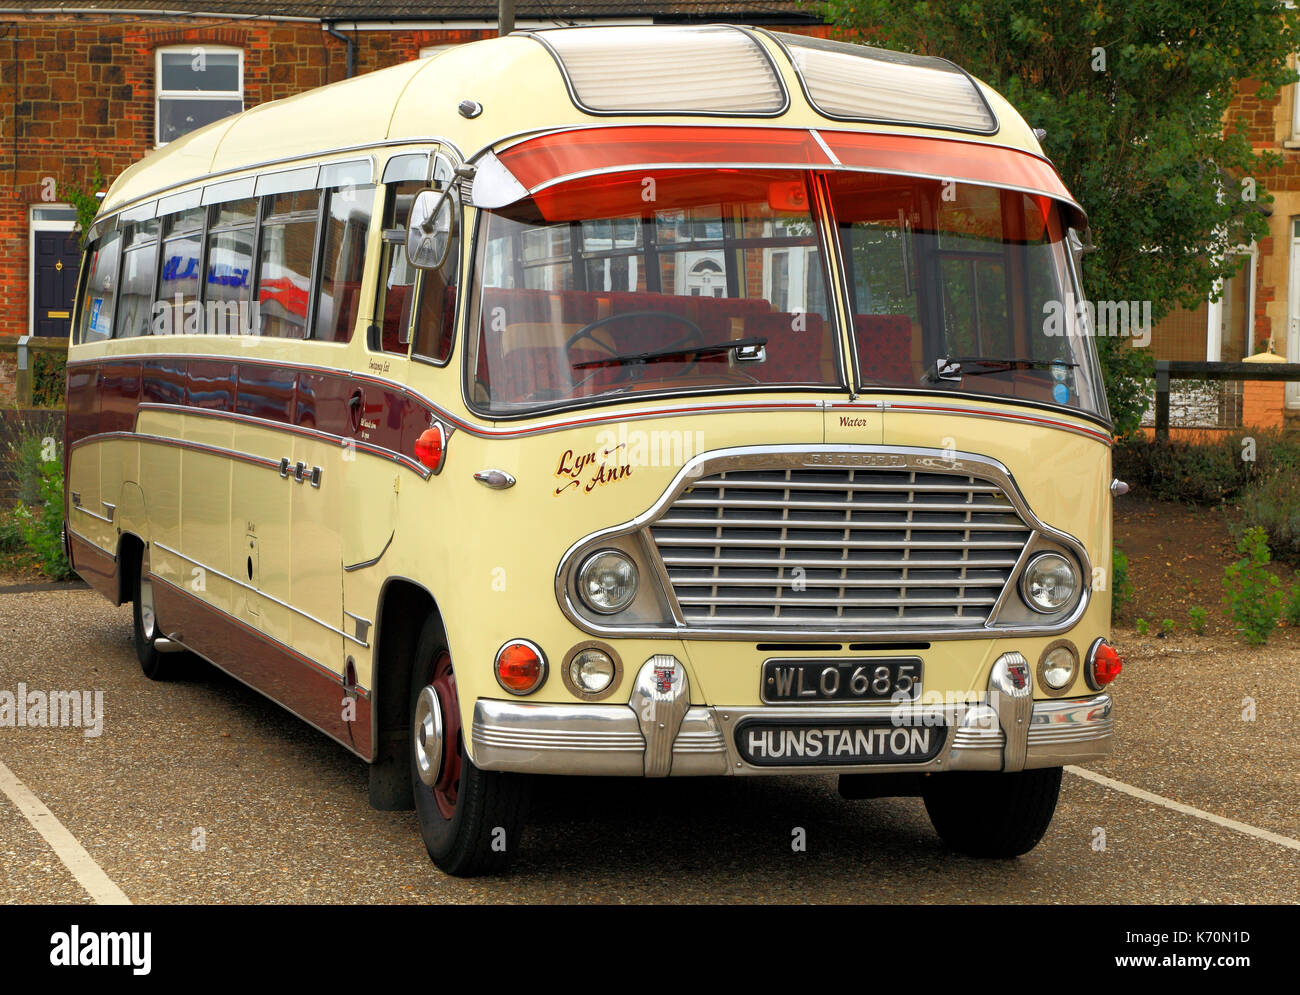 Vintage Car, construit 1959, les entraîneurs, les entraîneurs Spratt, bus, bus, voyages, transports, Wreningham, Norfolk, England, UK Banque D'Images